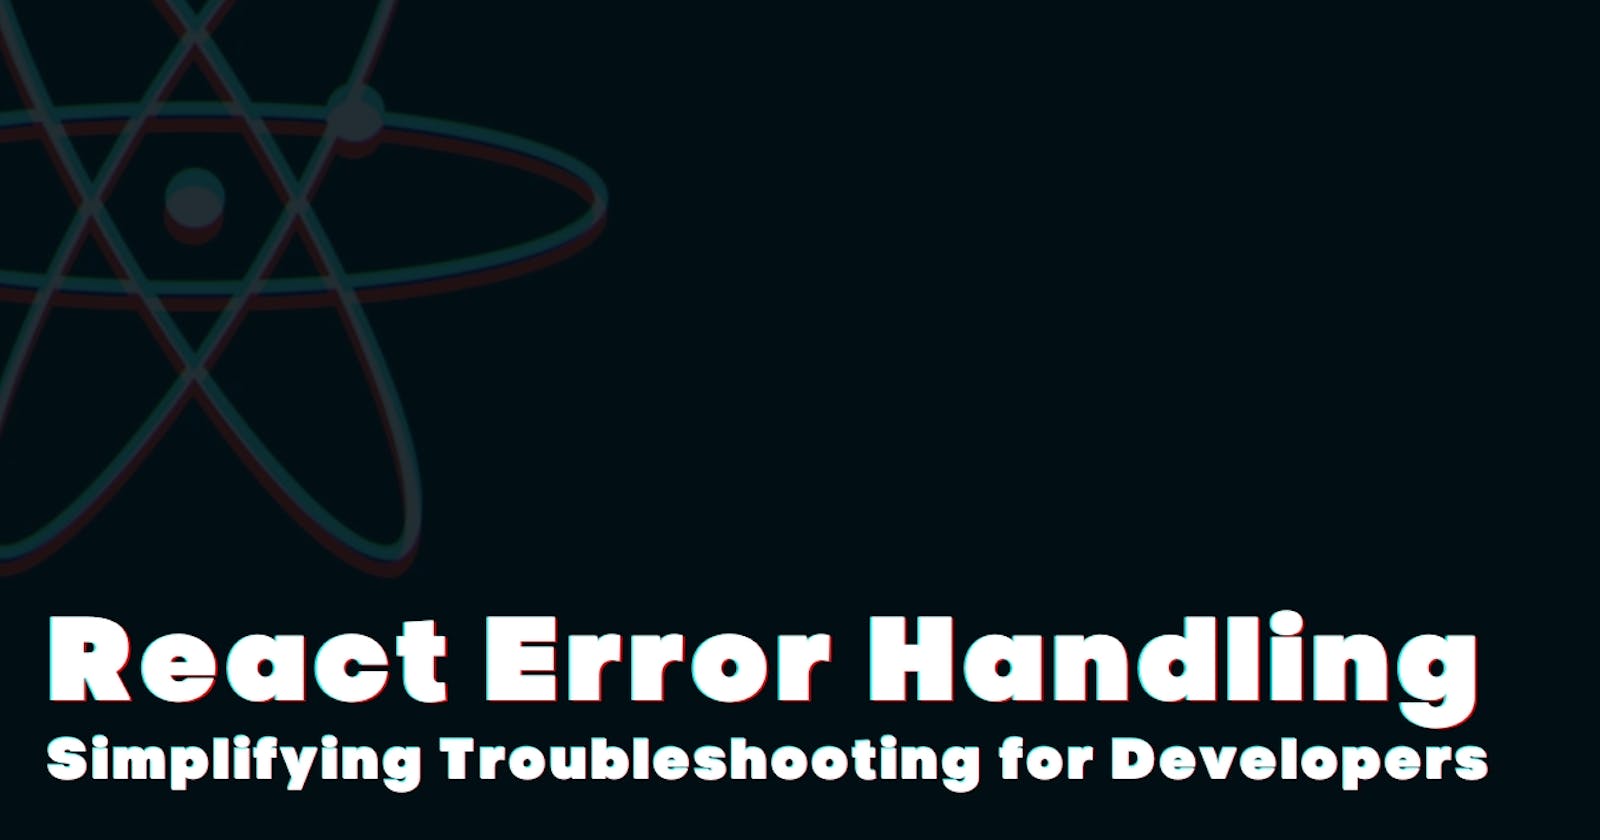 React Error Handling: Simplifying Troubleshooting for Developers